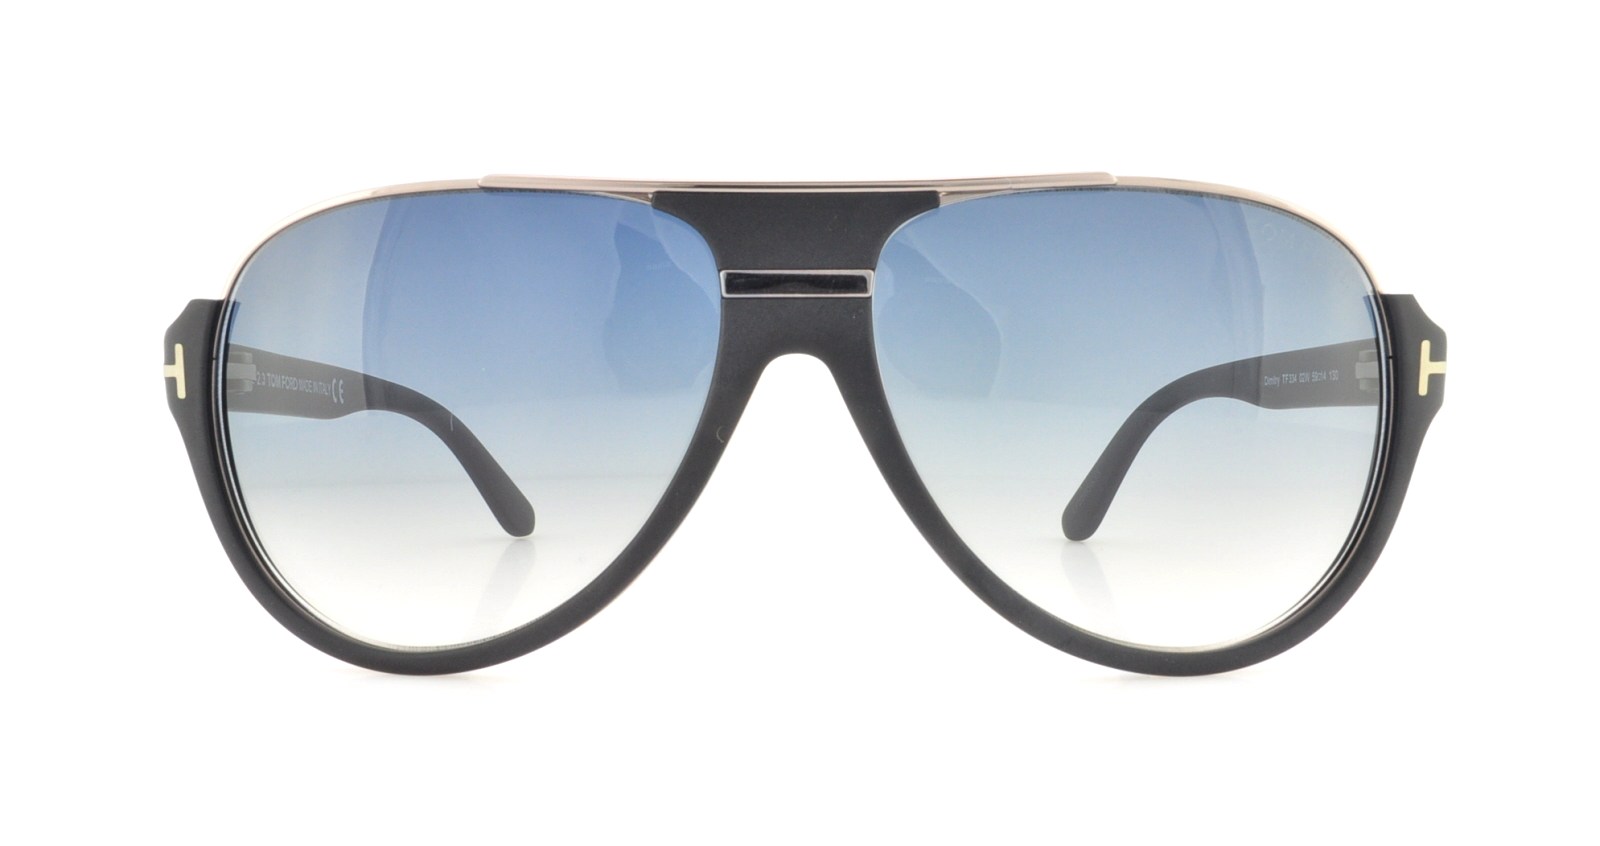 Designer Frames Outlet. Tom Ford Sunglasses FT0334 Dimitry